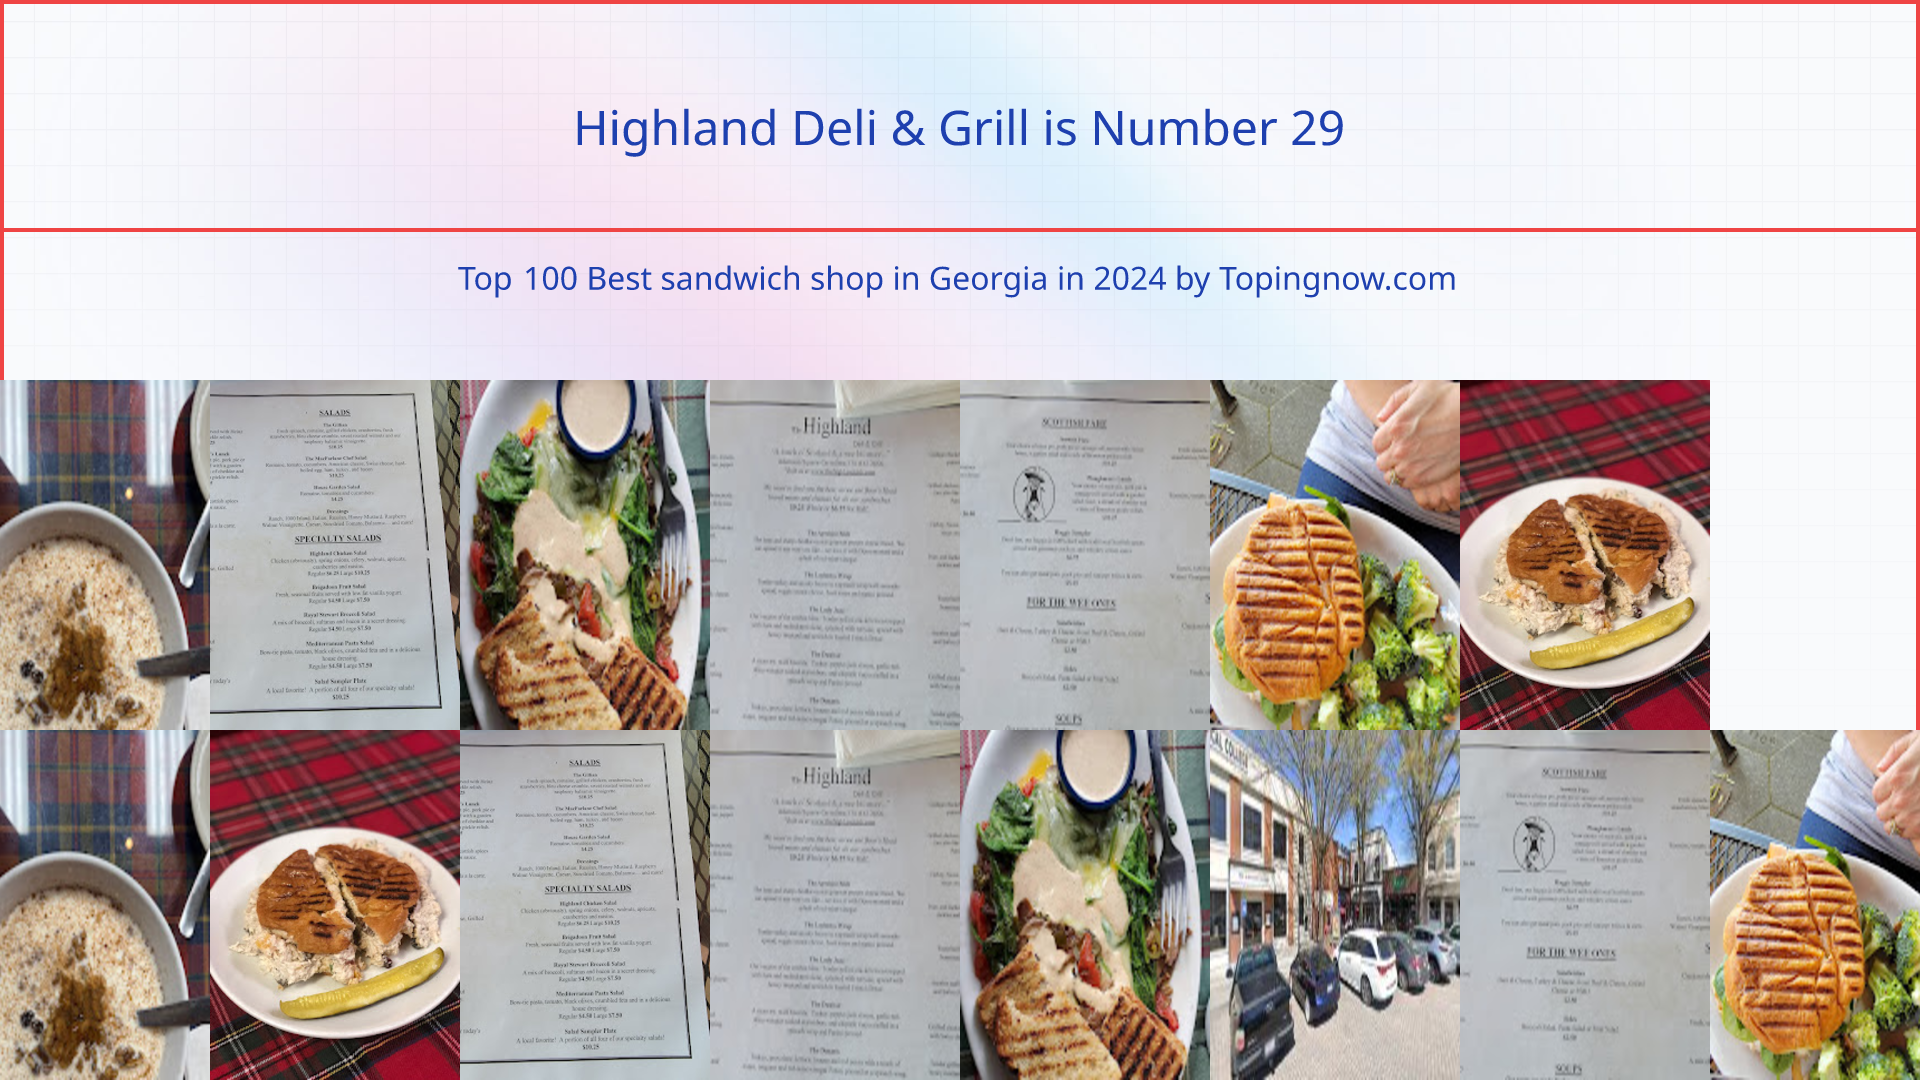 Highland Deli & Grill: Top 100 Best sandwich shop in Georgia in 2024